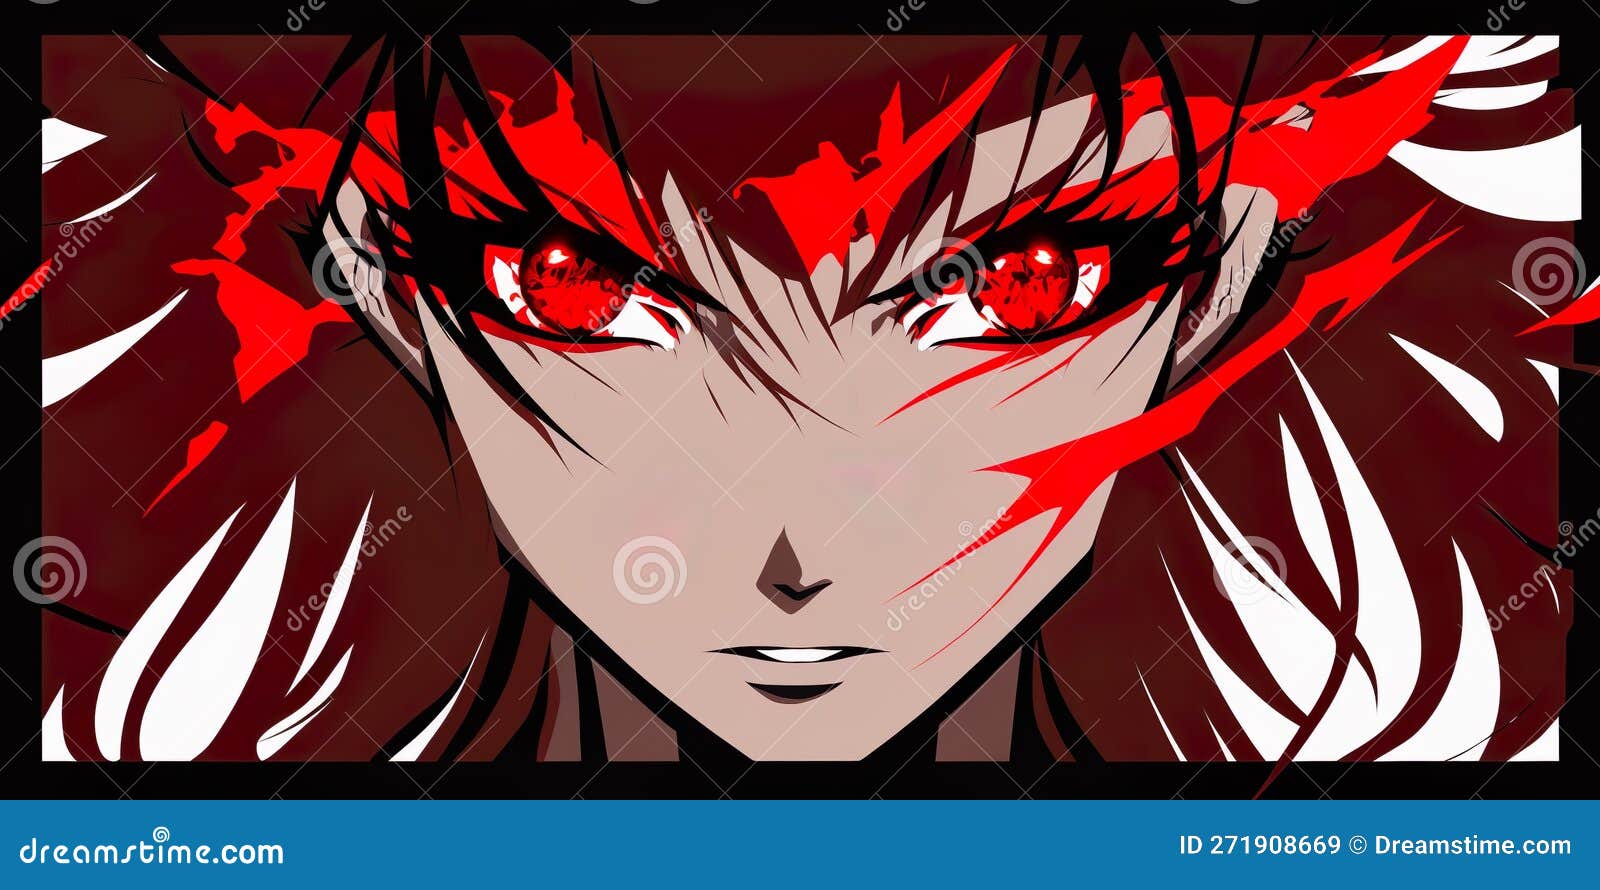 Colección detallada de banners de anime | Vector Gratis-demhanvico.com.vn